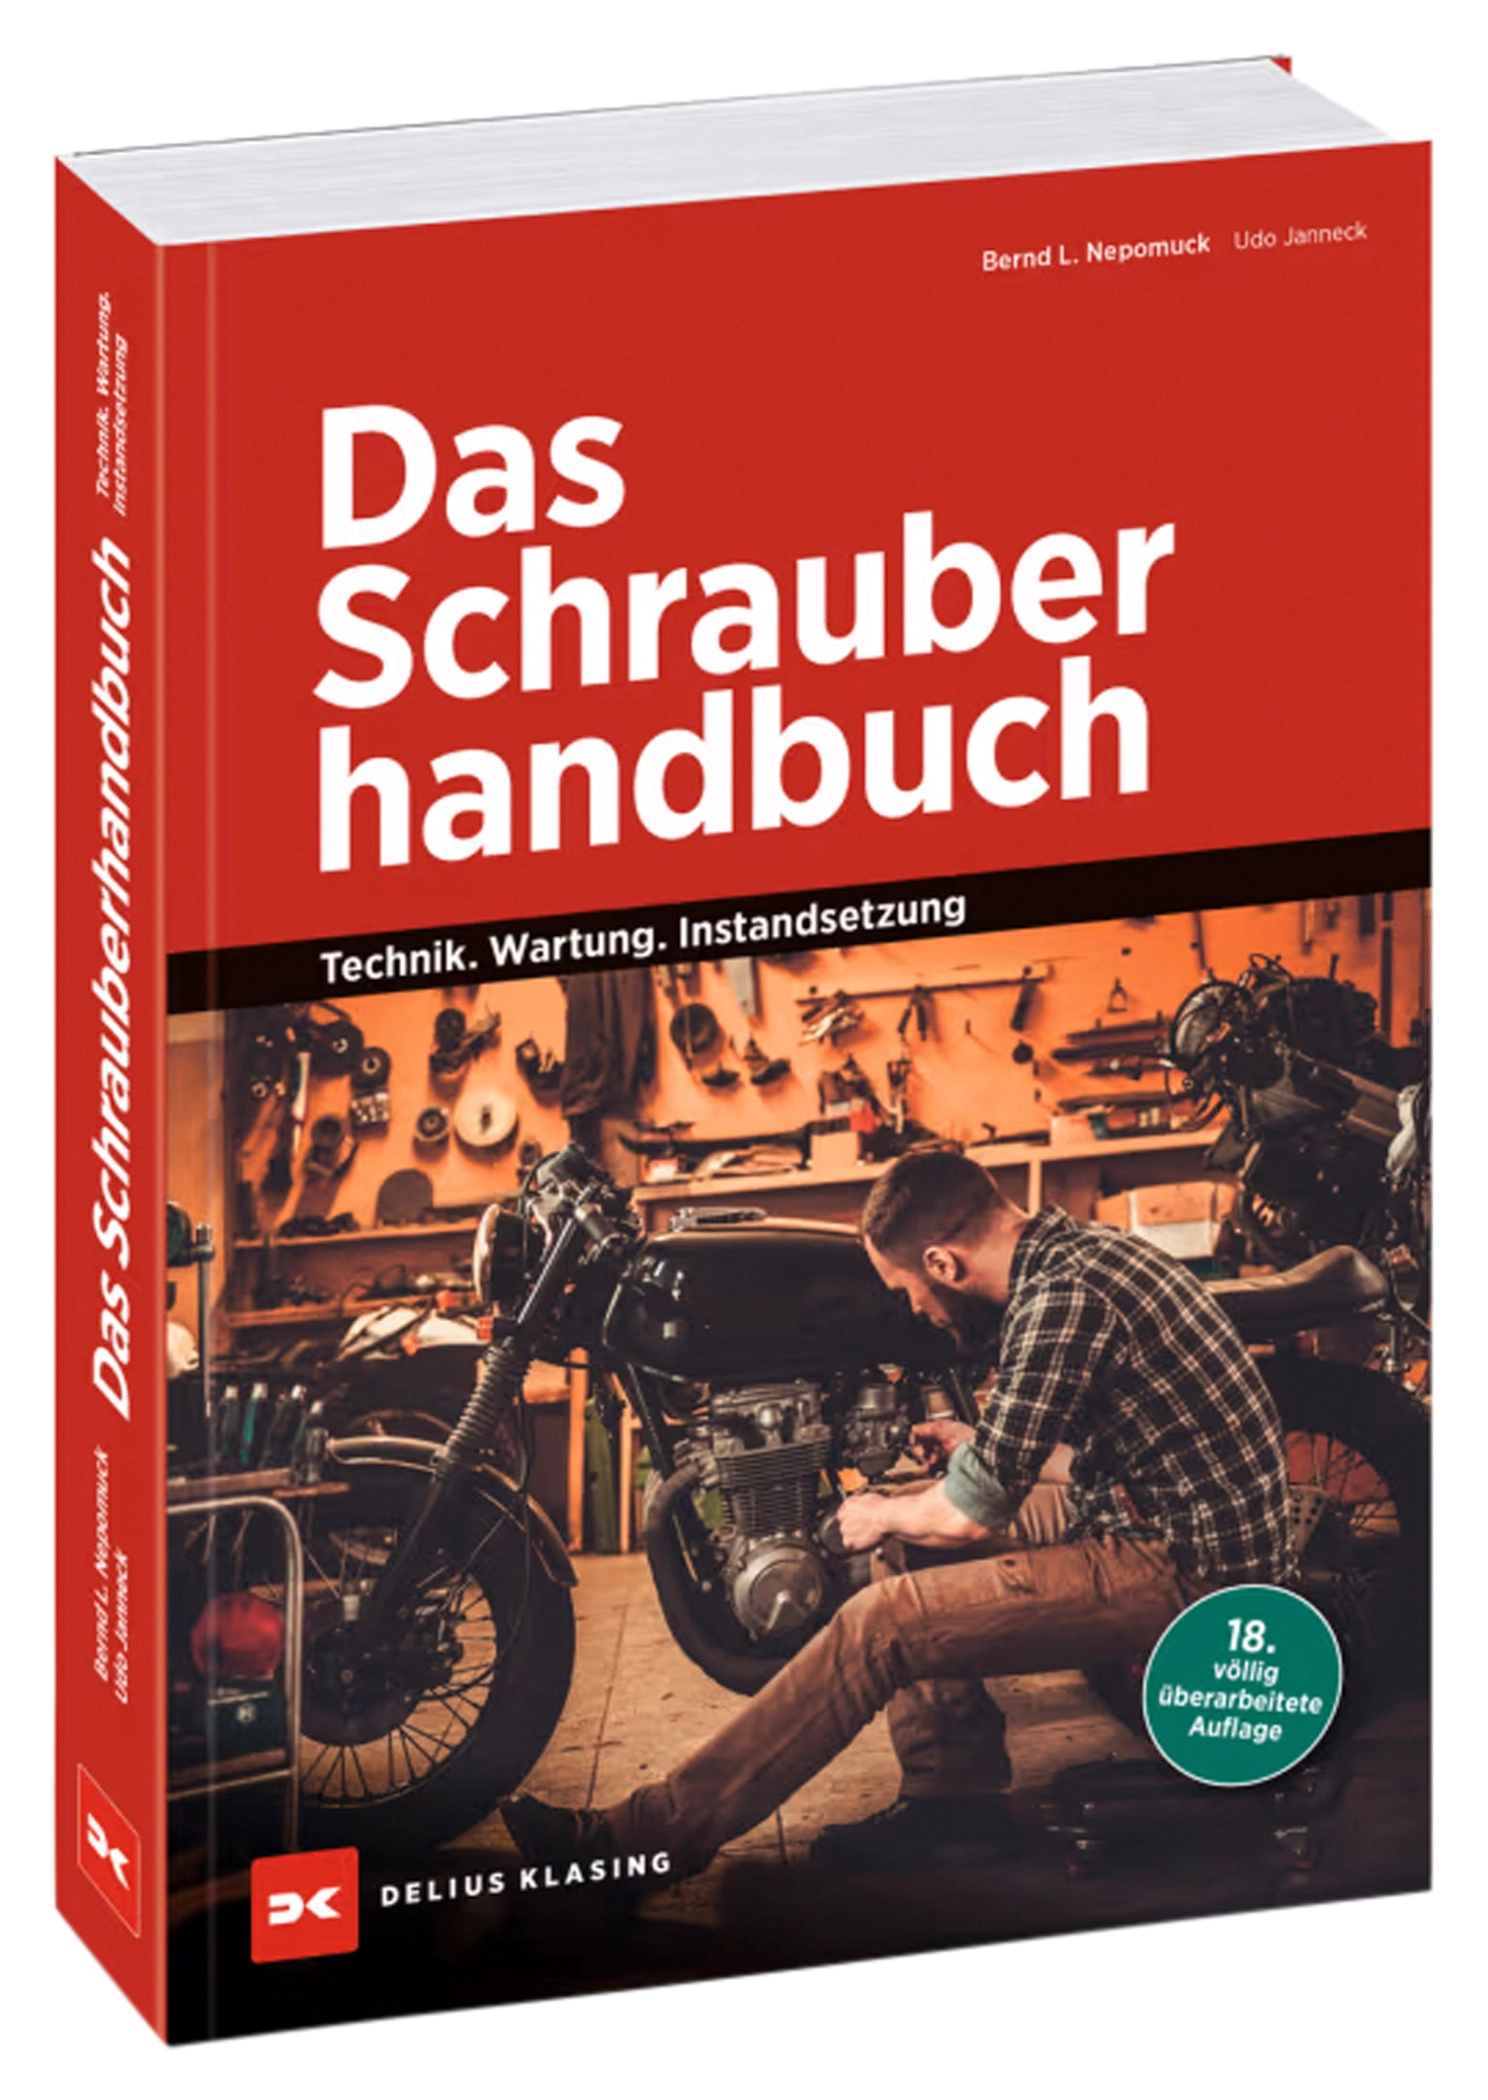 BOOK: DAS SCHRAUBERHAND-